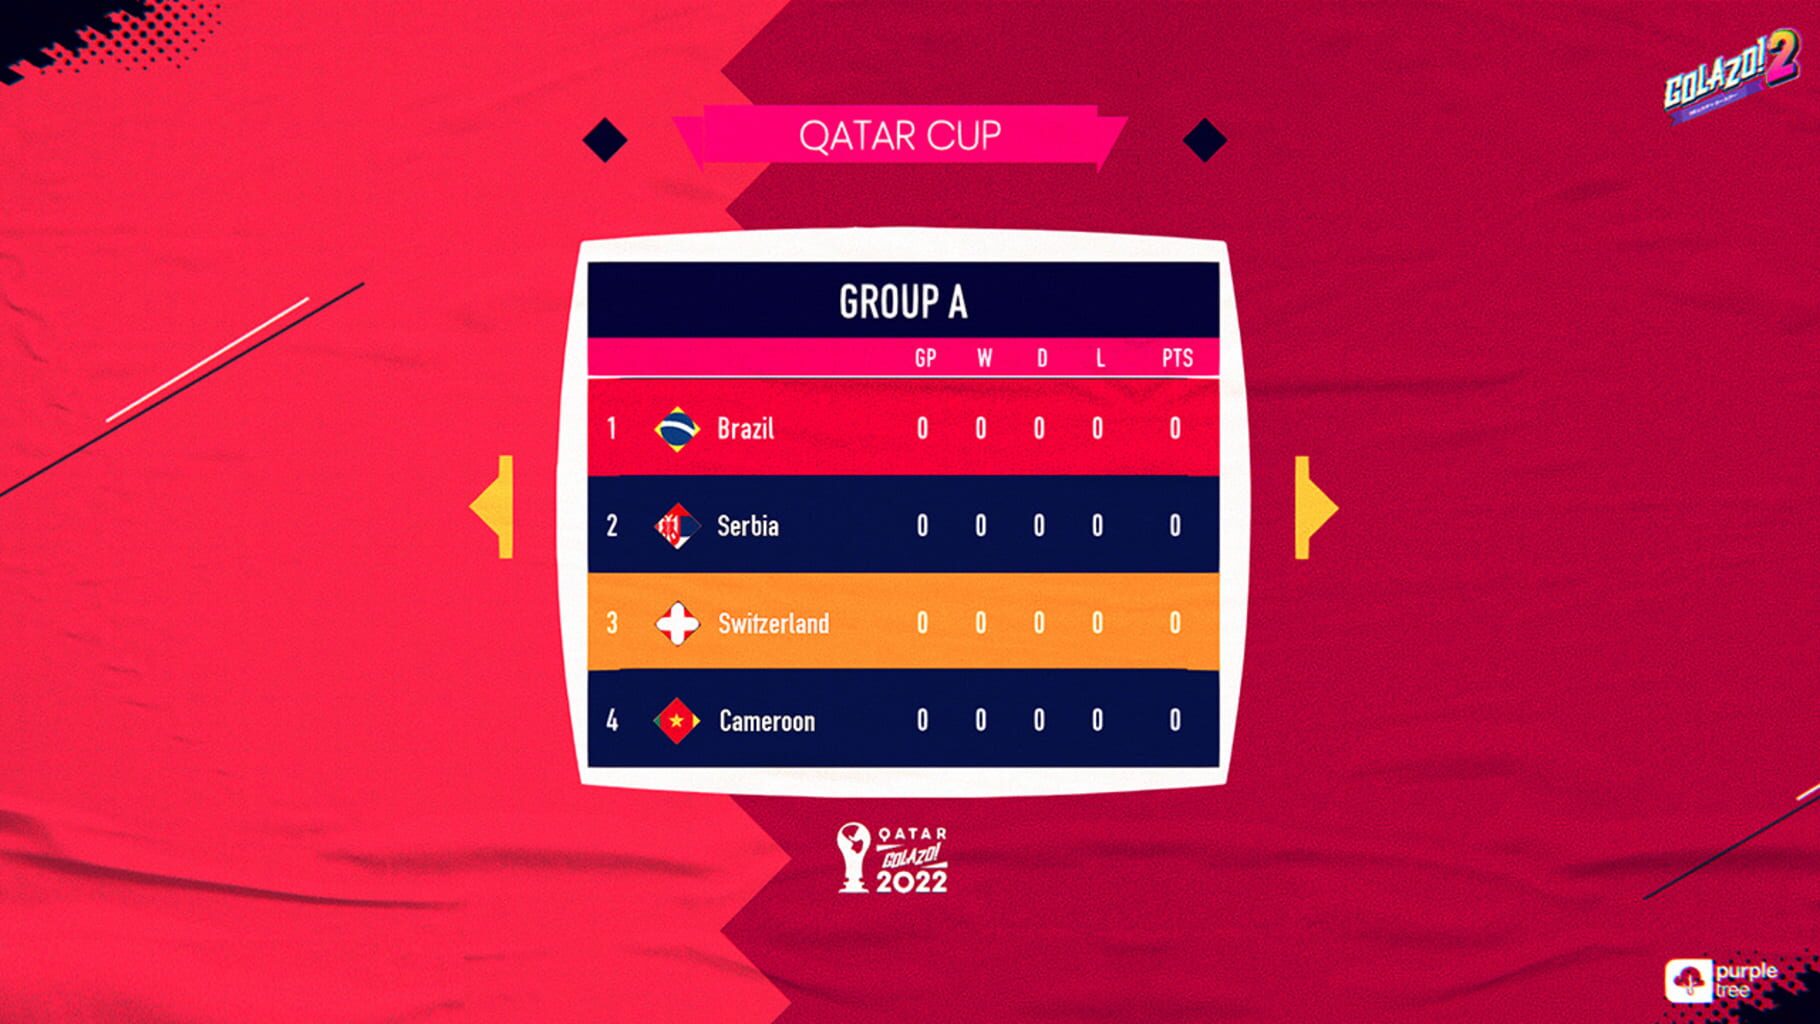 Golazo! 2: Soccer Cup 2022 screenshot